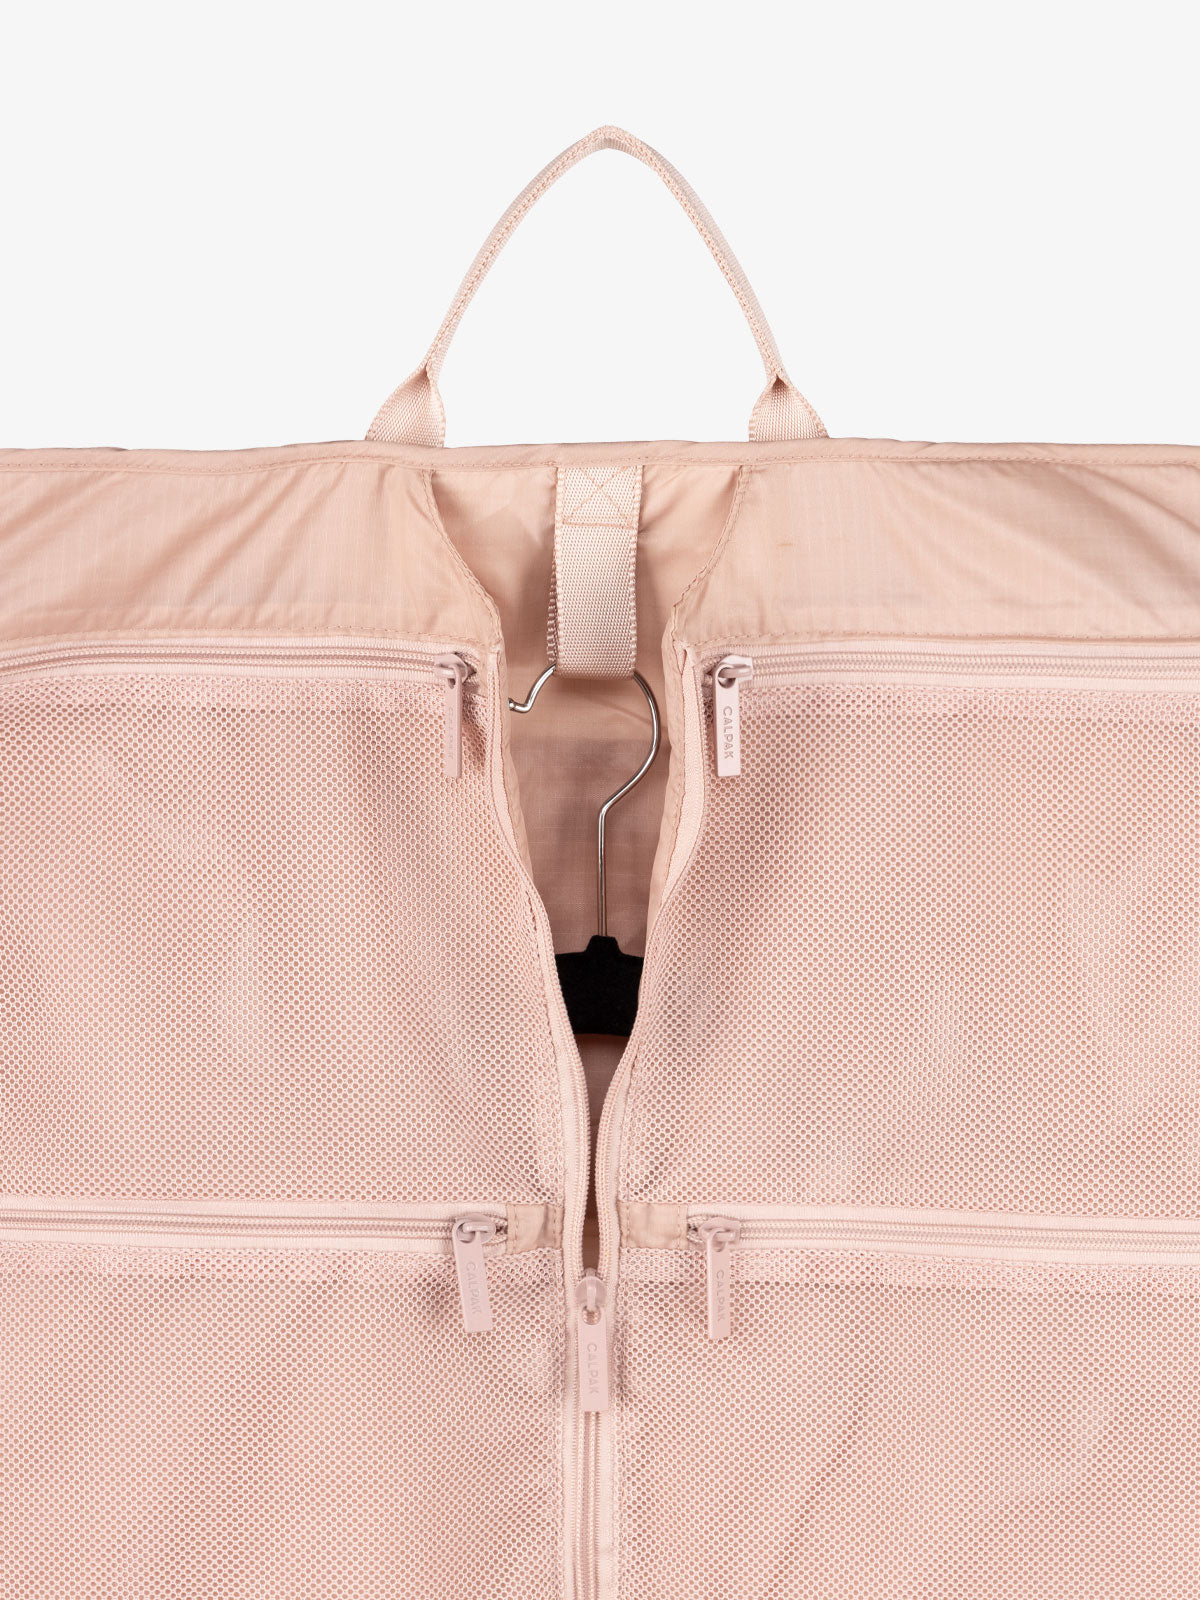 Compakt Large Garment Bag | CALPAK